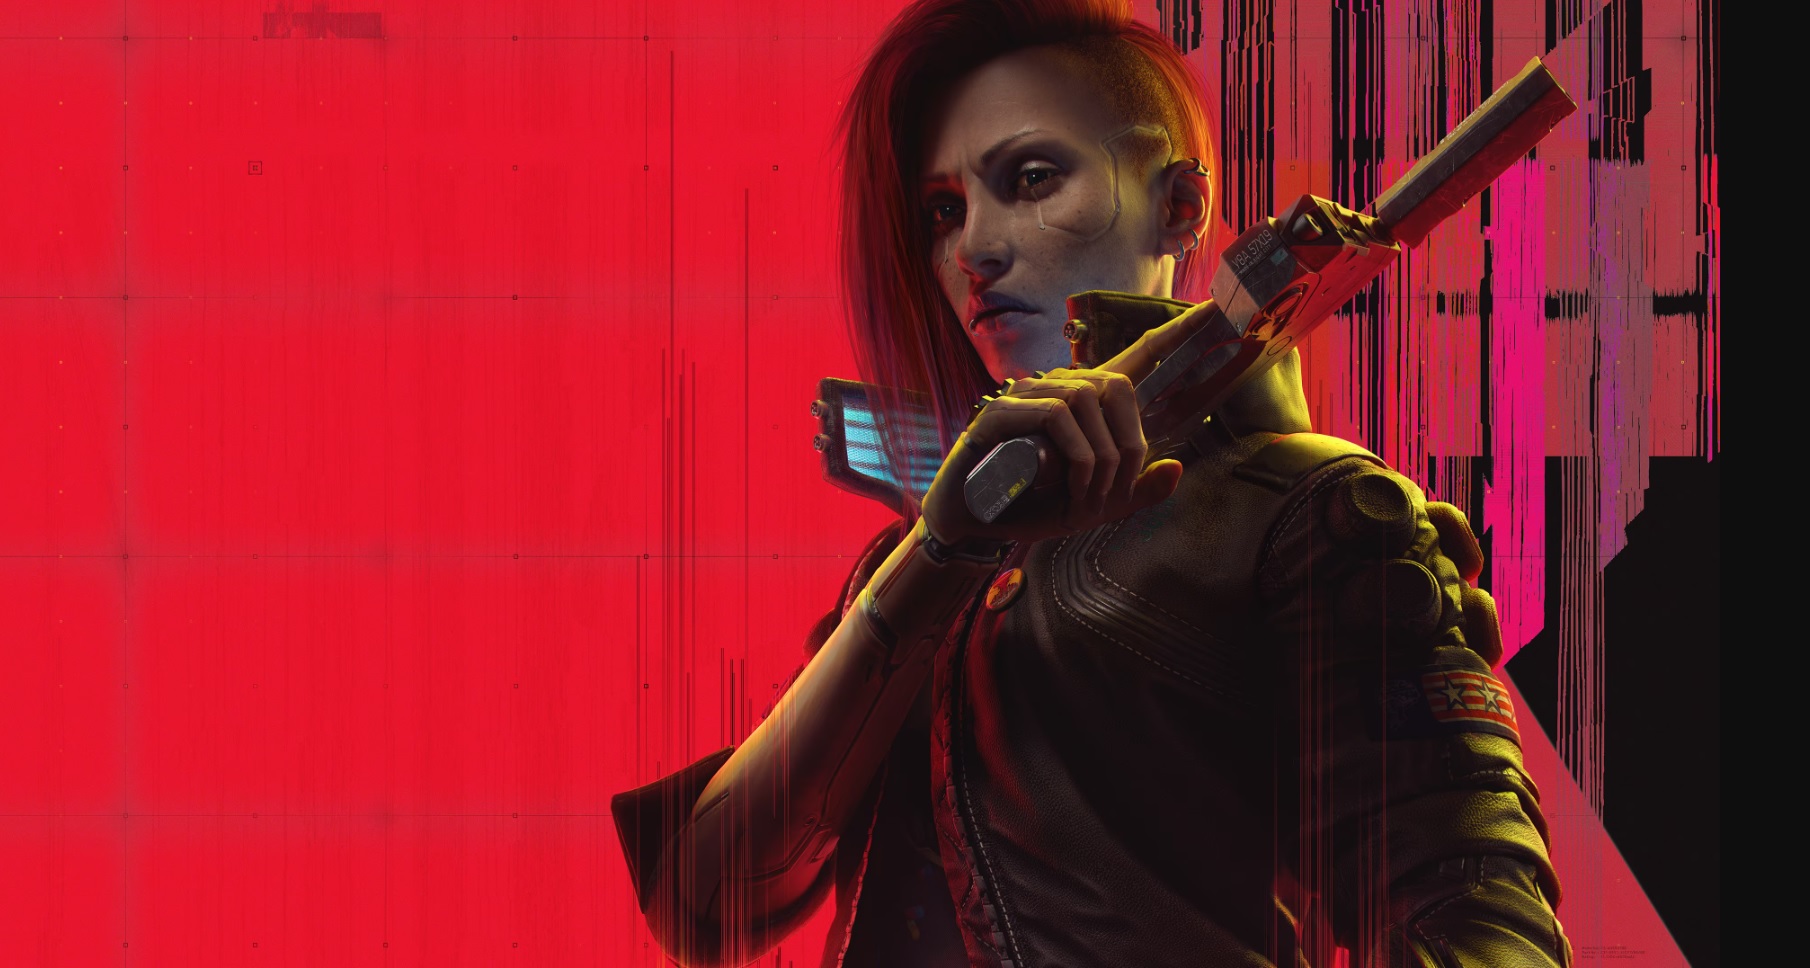 Cyberpunk 2077 big 2.0 update arrives ahead of Phantom Liberty expansion